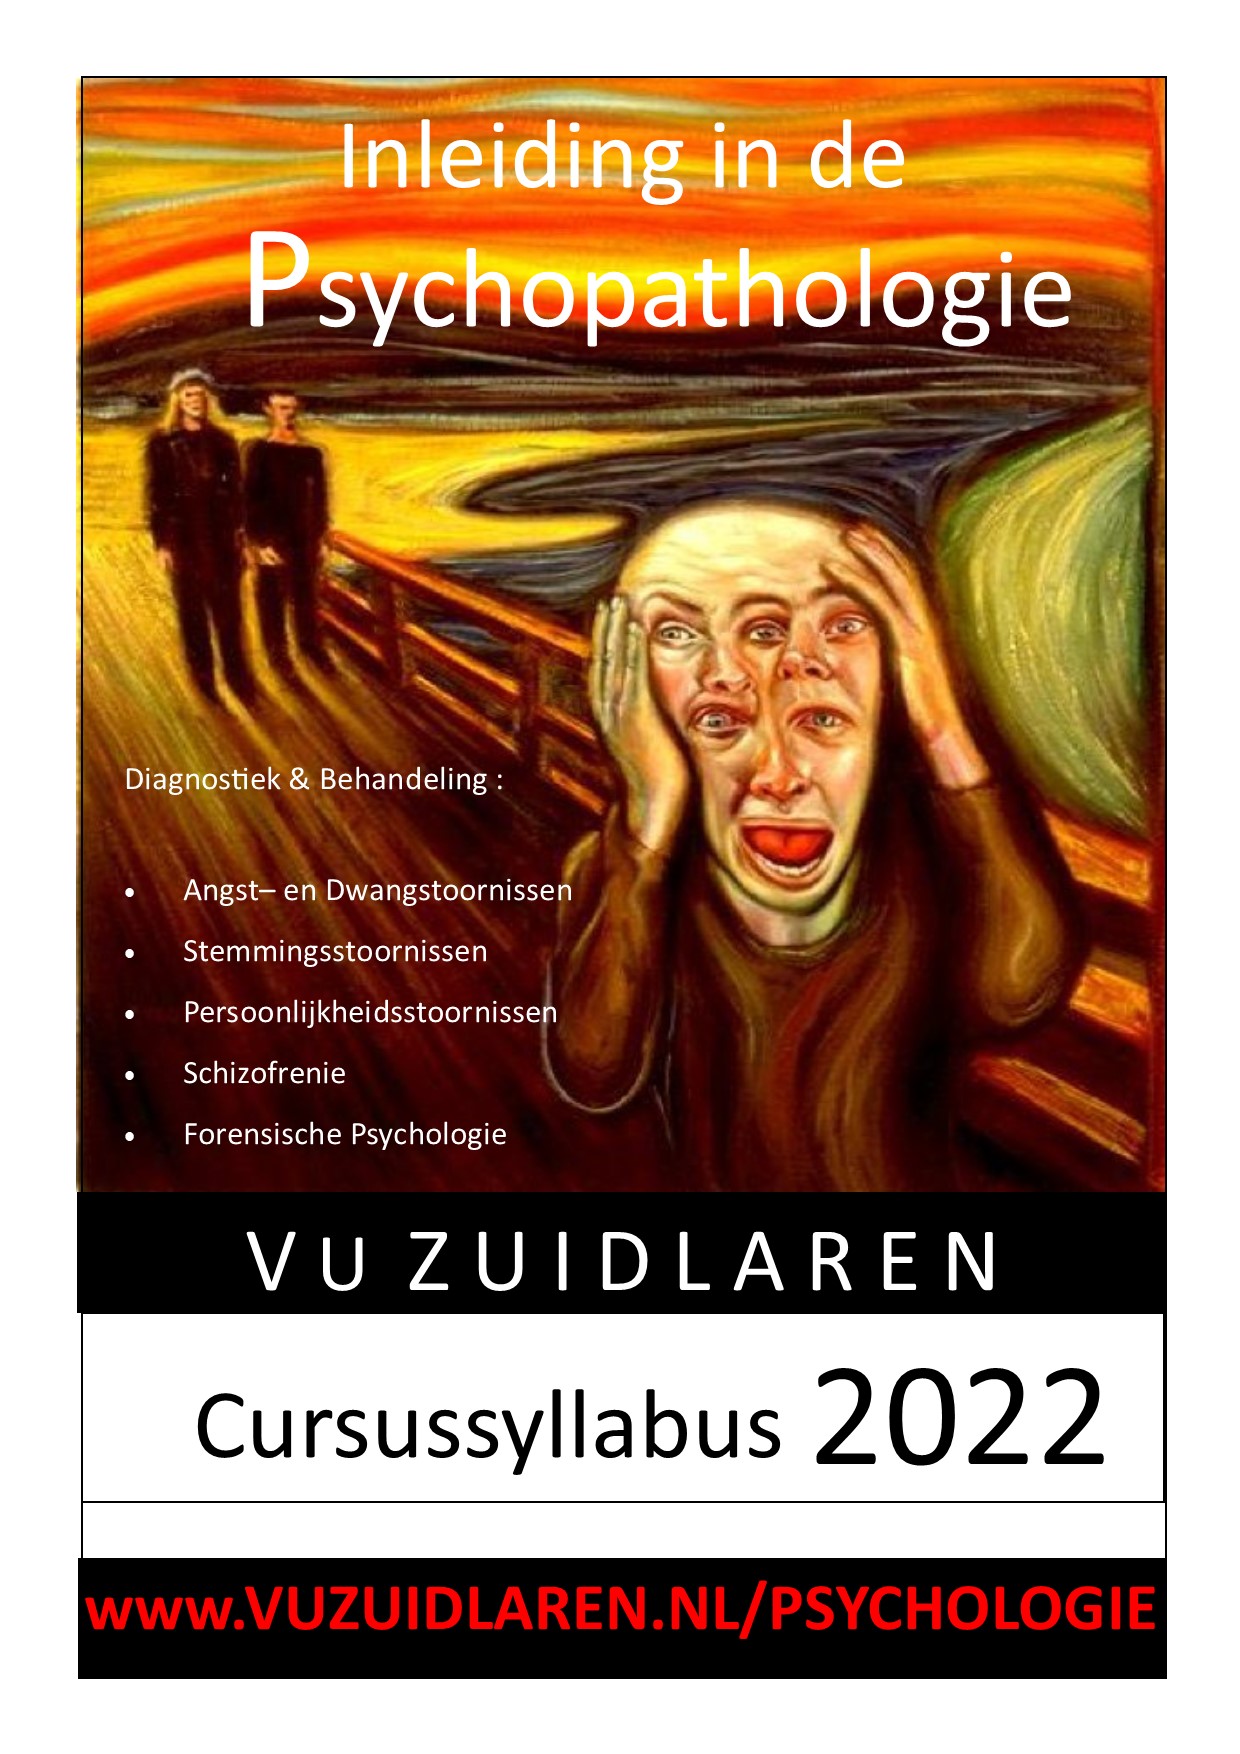 Klinische psychologie / psychiatrie